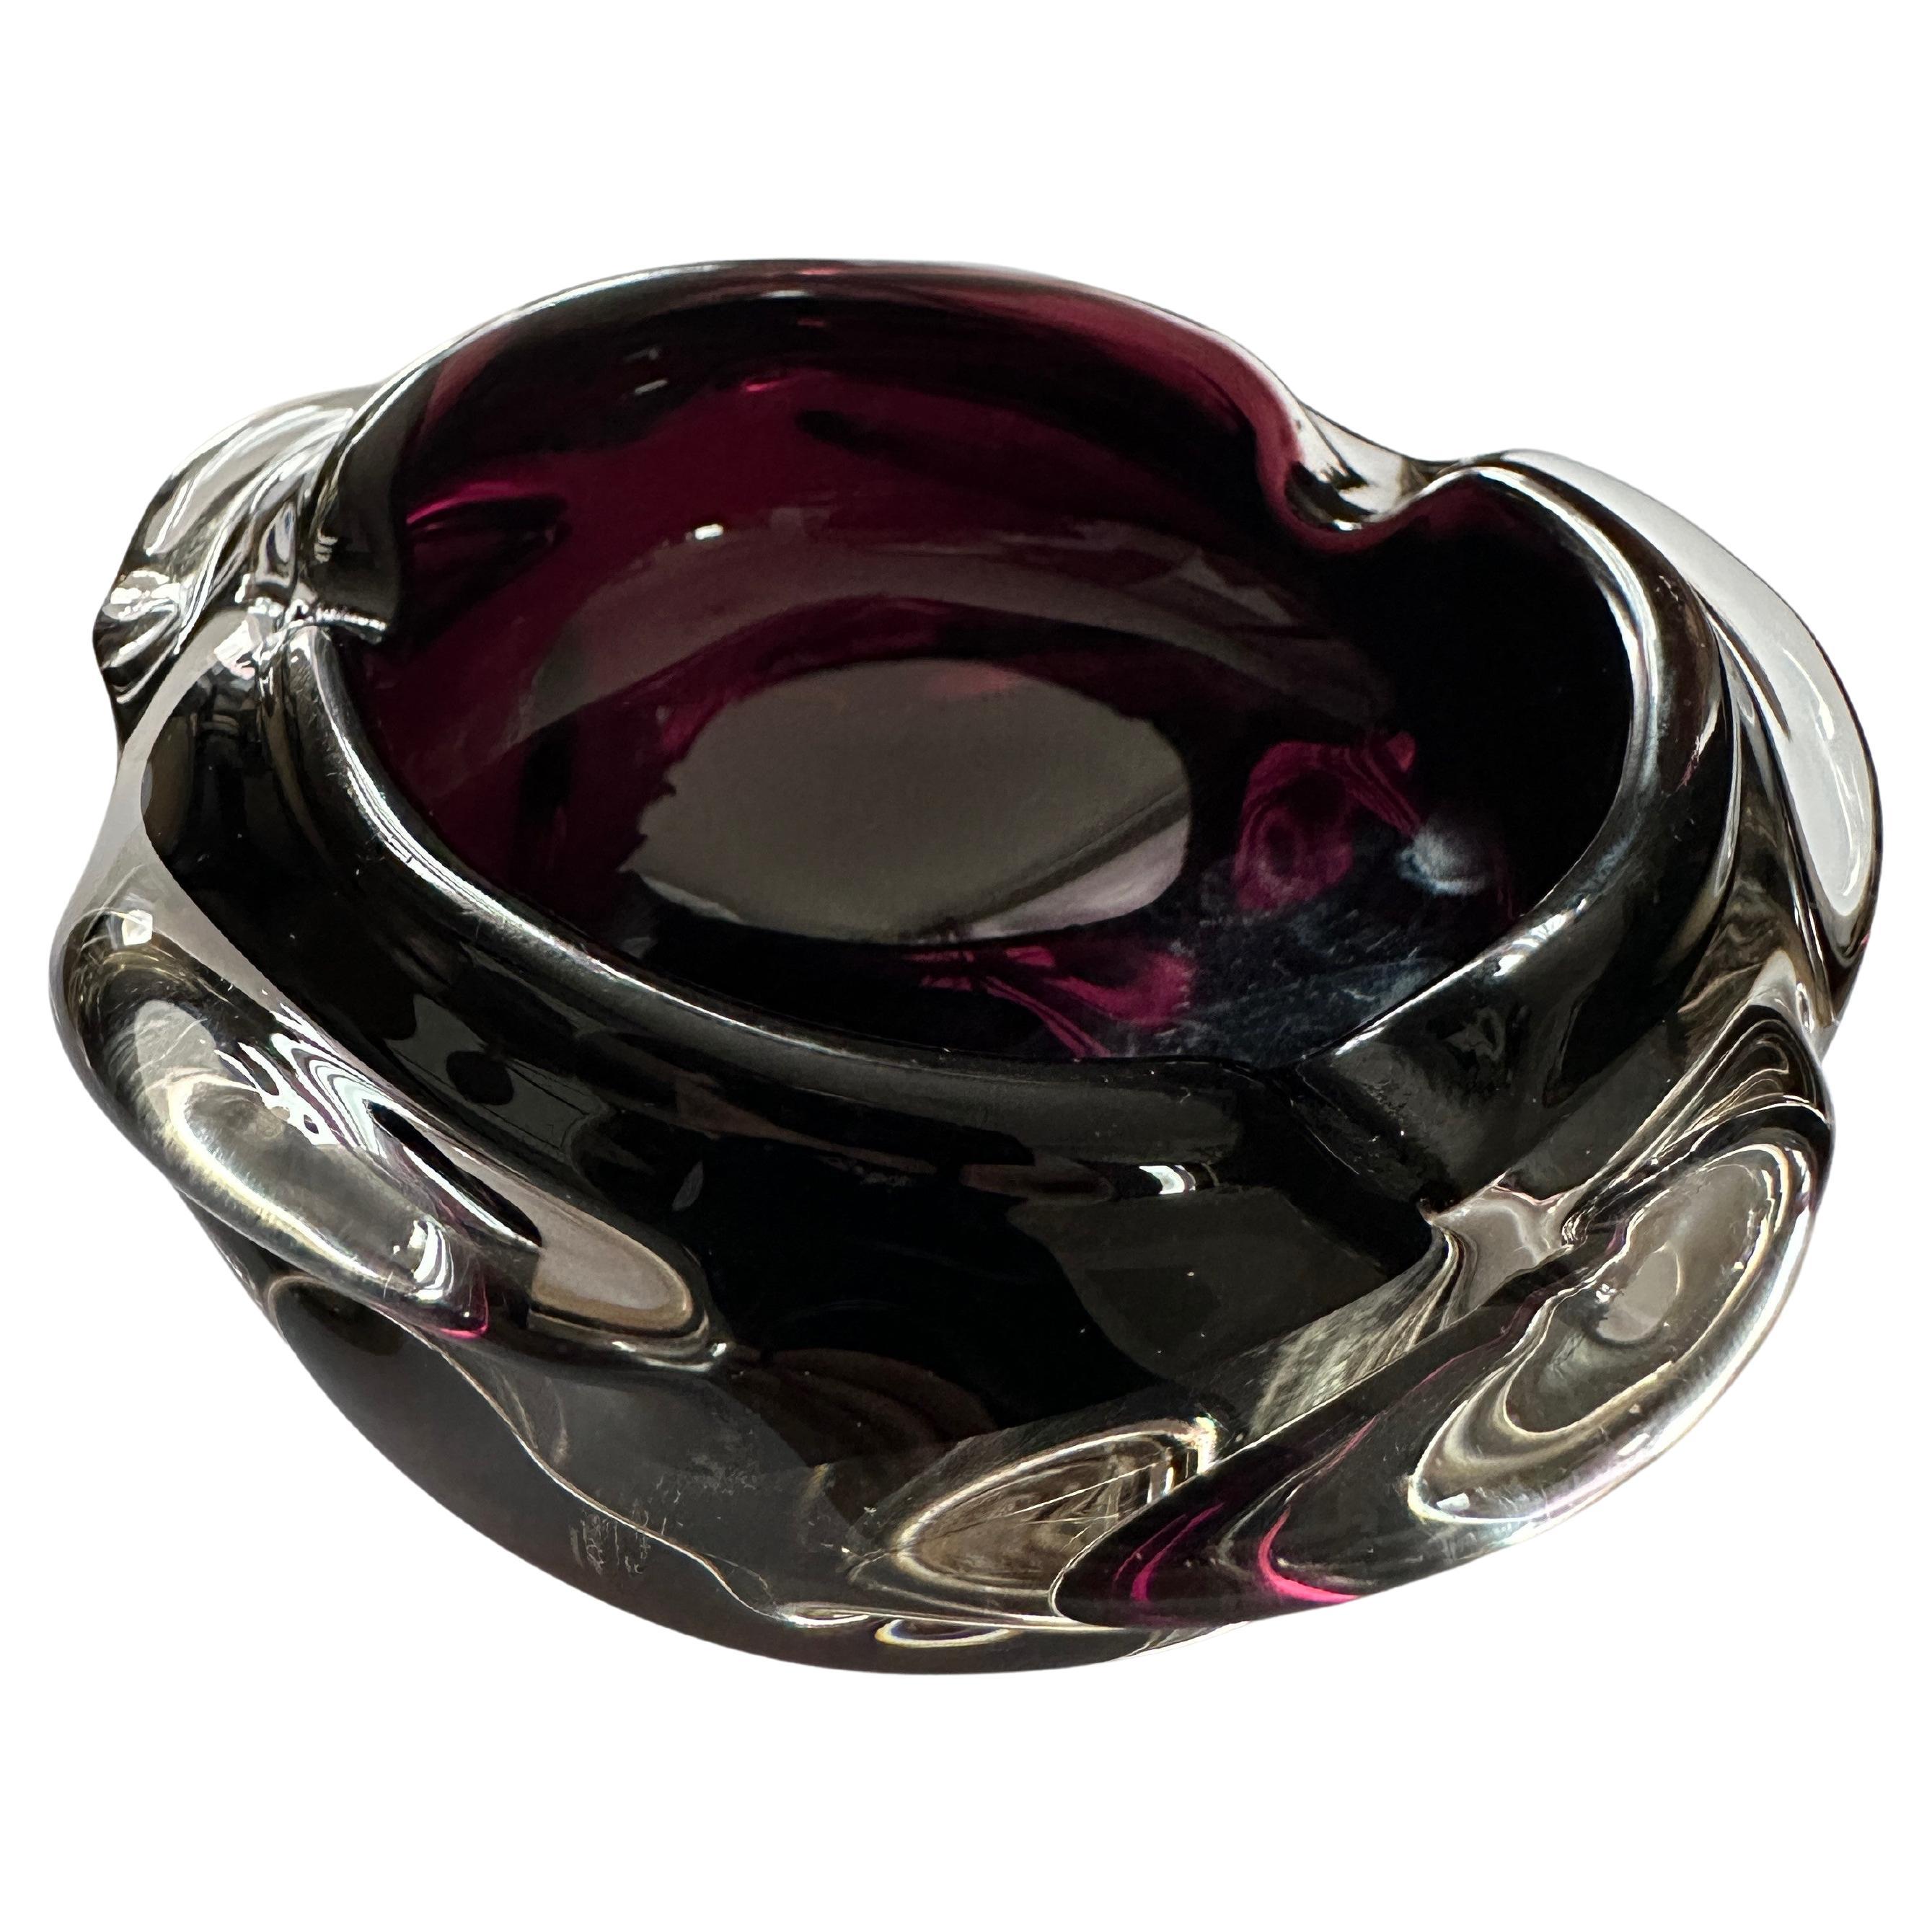 Midcentury Bowl in Dark Burgundy Color, 1960s For Sale